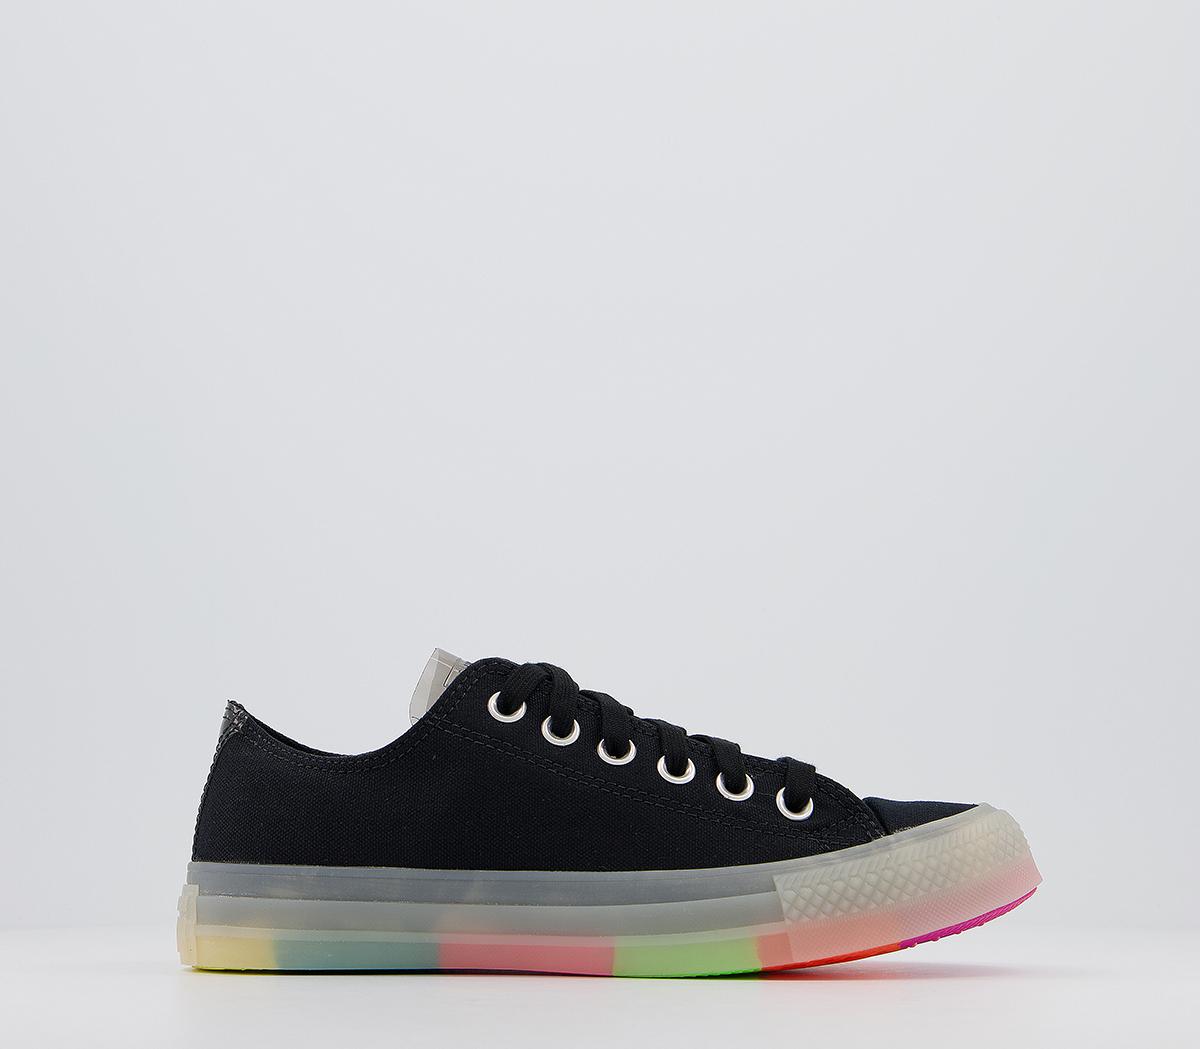 neon converse sneakers